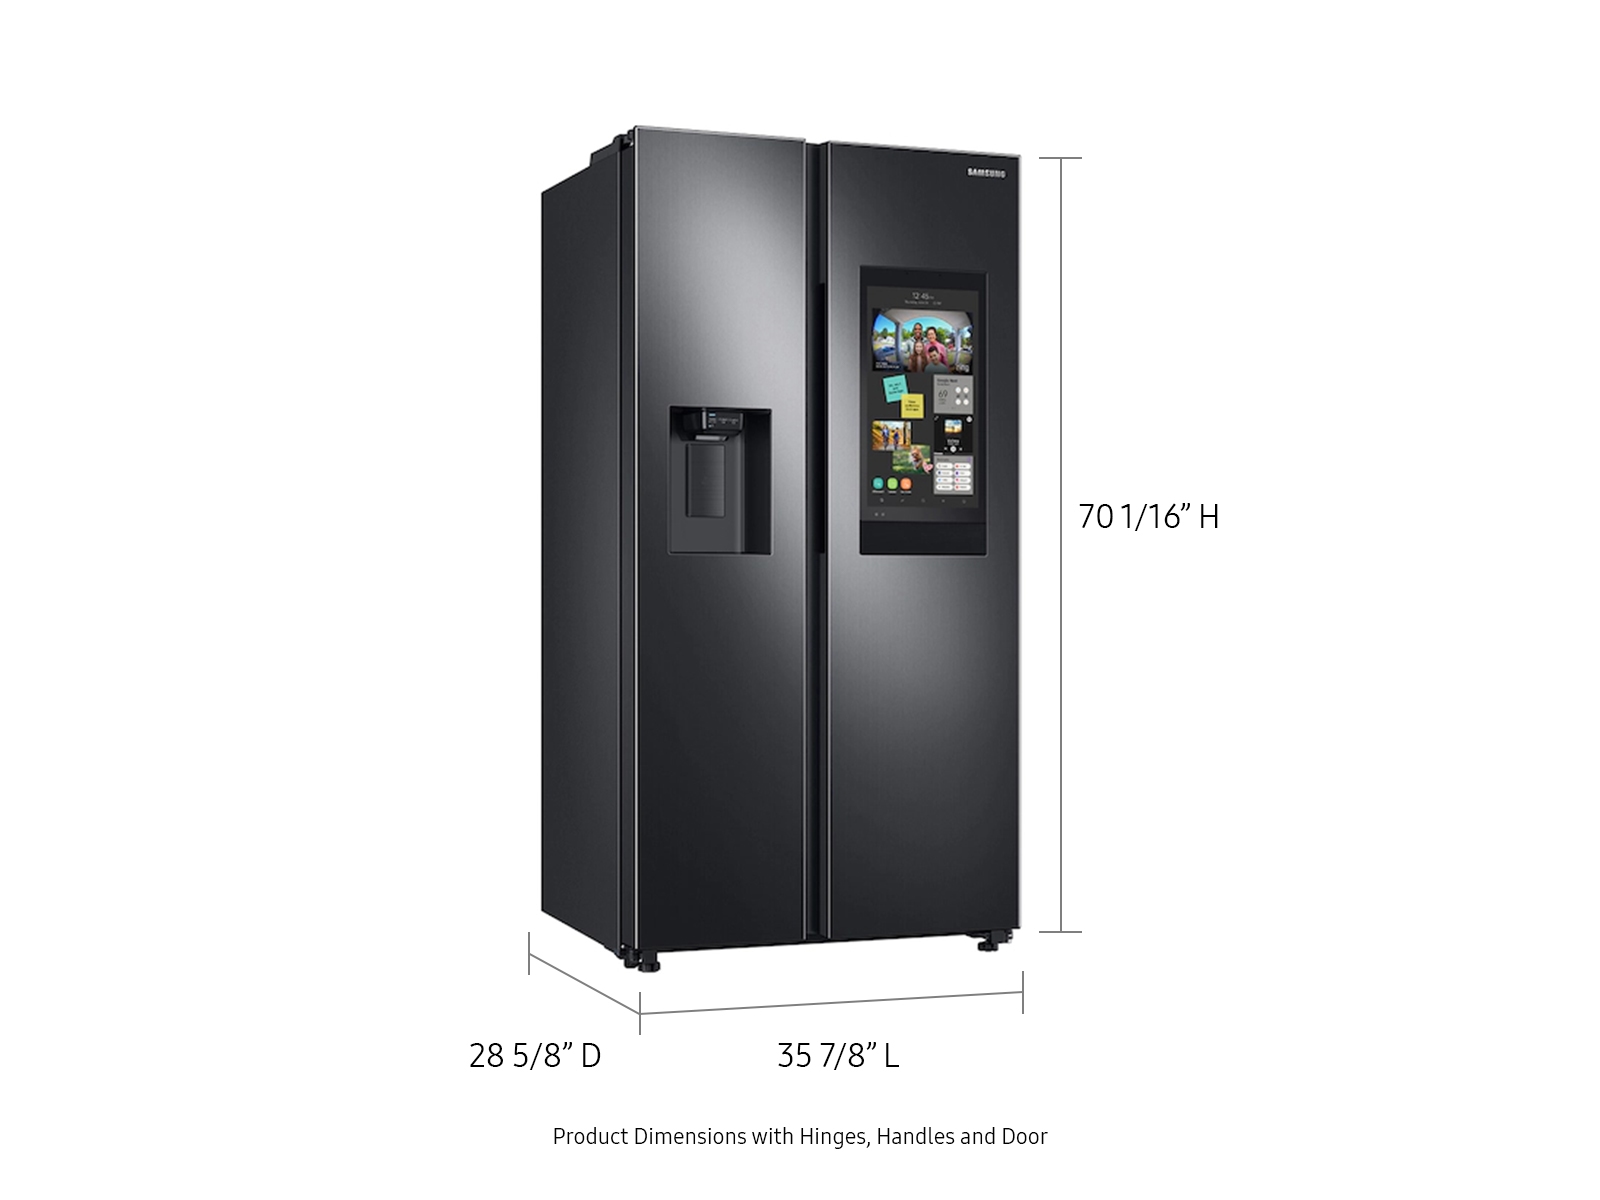 https://image-us.samsung.com/SamsungUS/home/home-appliances/refrigerators/pdp/10132021/Refrigerator_RS22T5561SG-AA_70-1-16x35-7-8x28-5-8.jpg?$product-details-jpg$